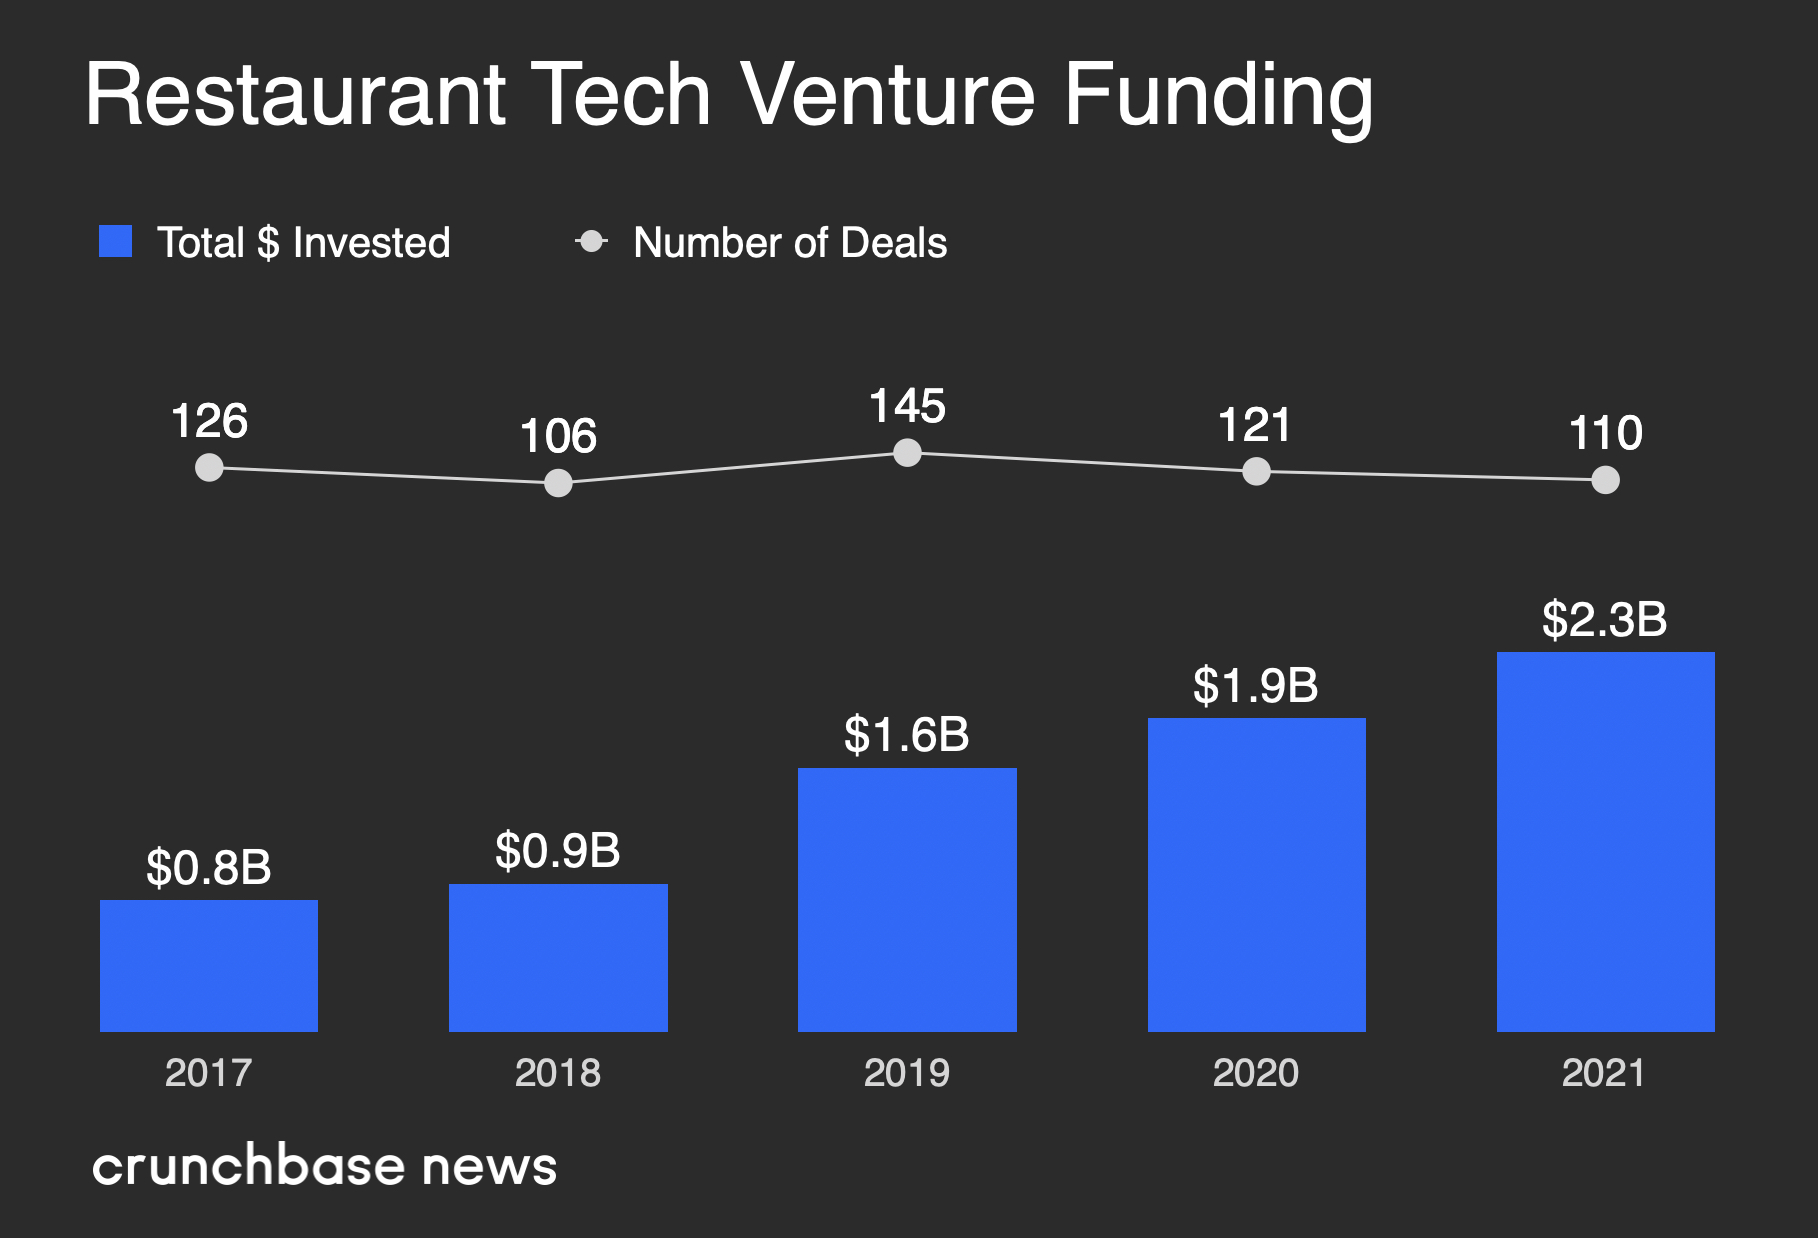 Restaurant Tech Venture Funding